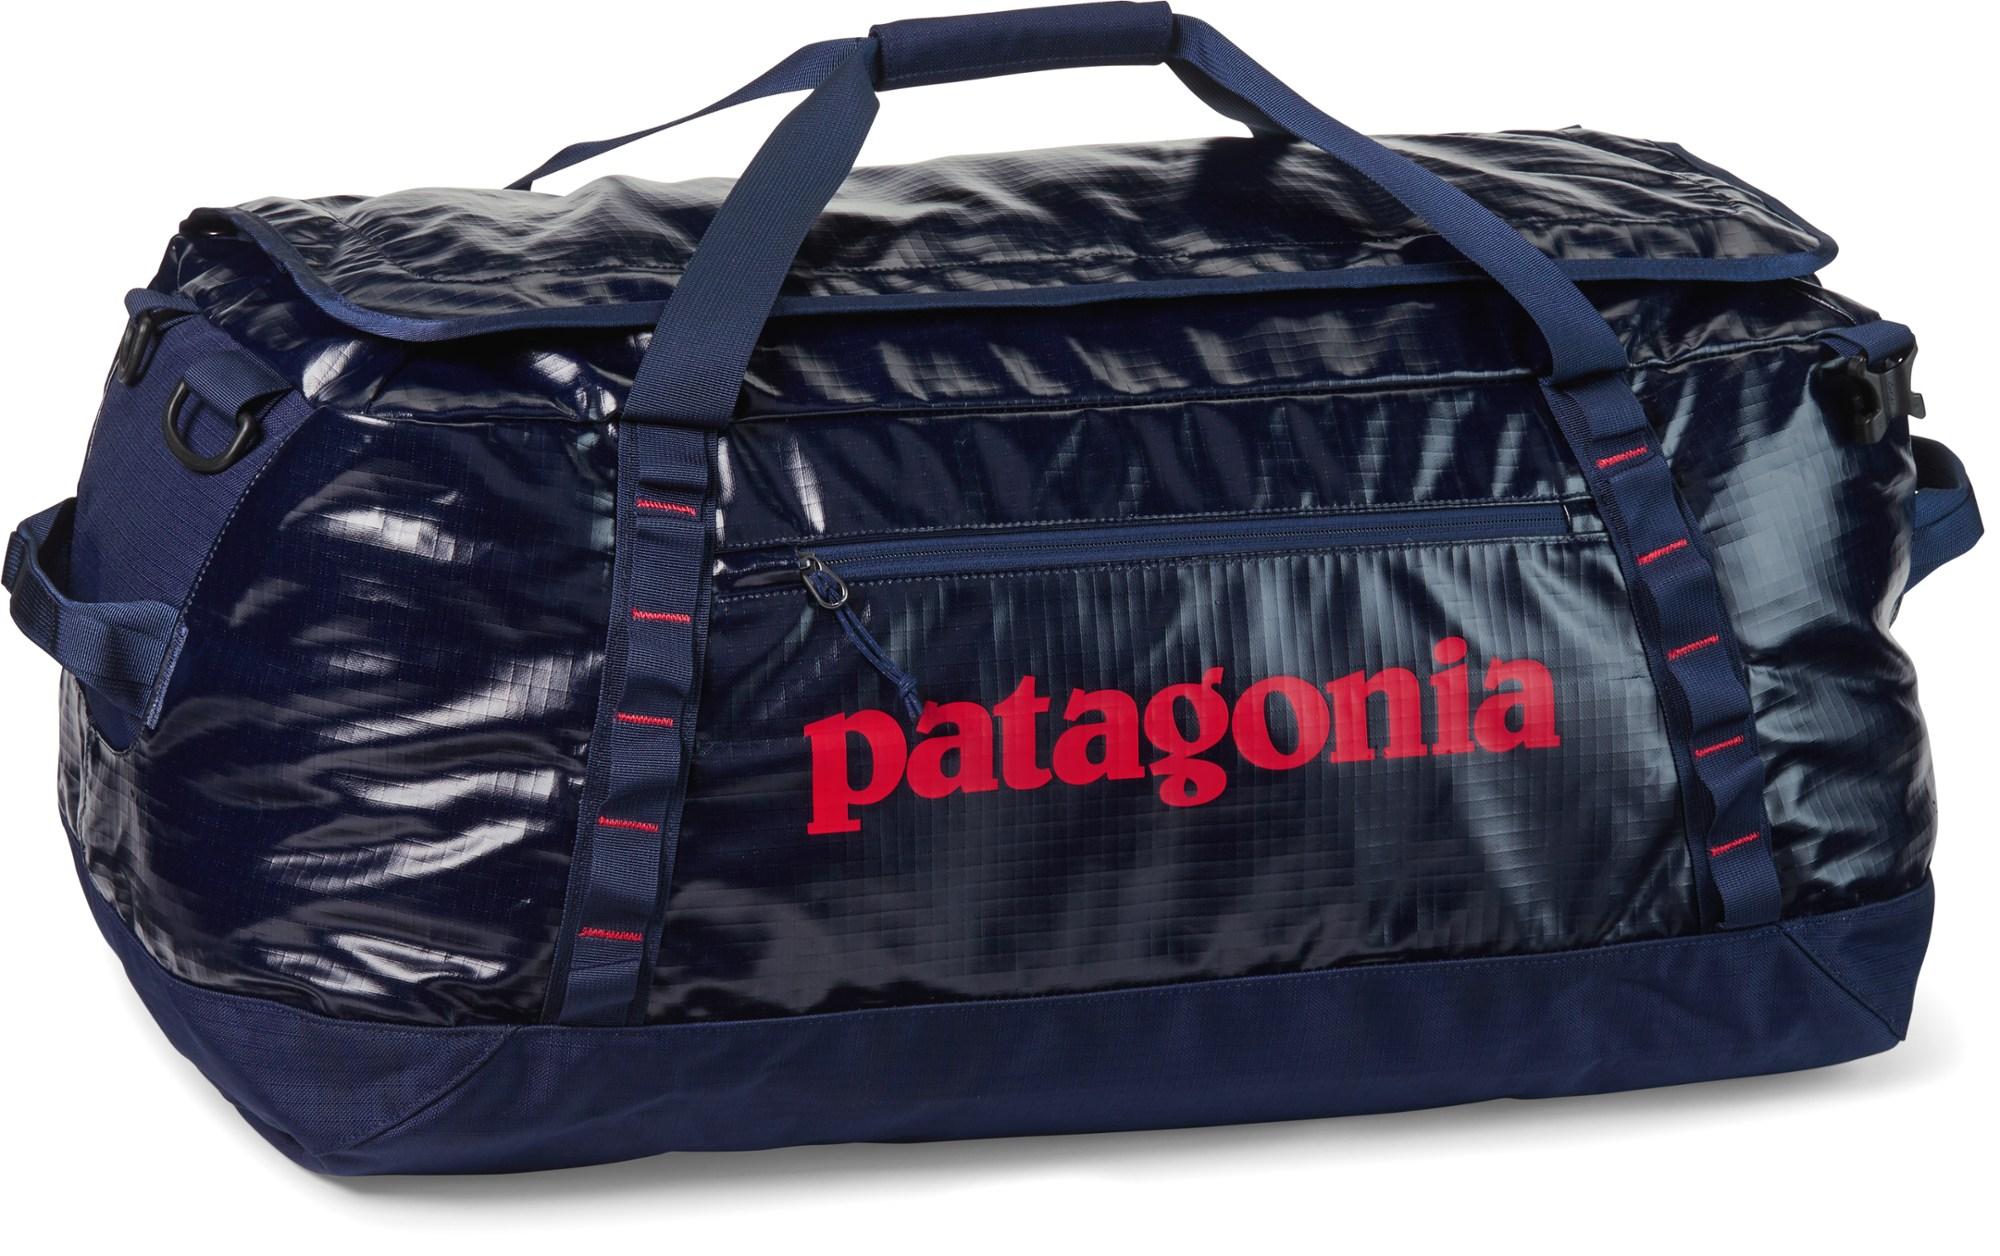 Patagonia 70L Black Hole Duffel Bag for $138.93 Shipped